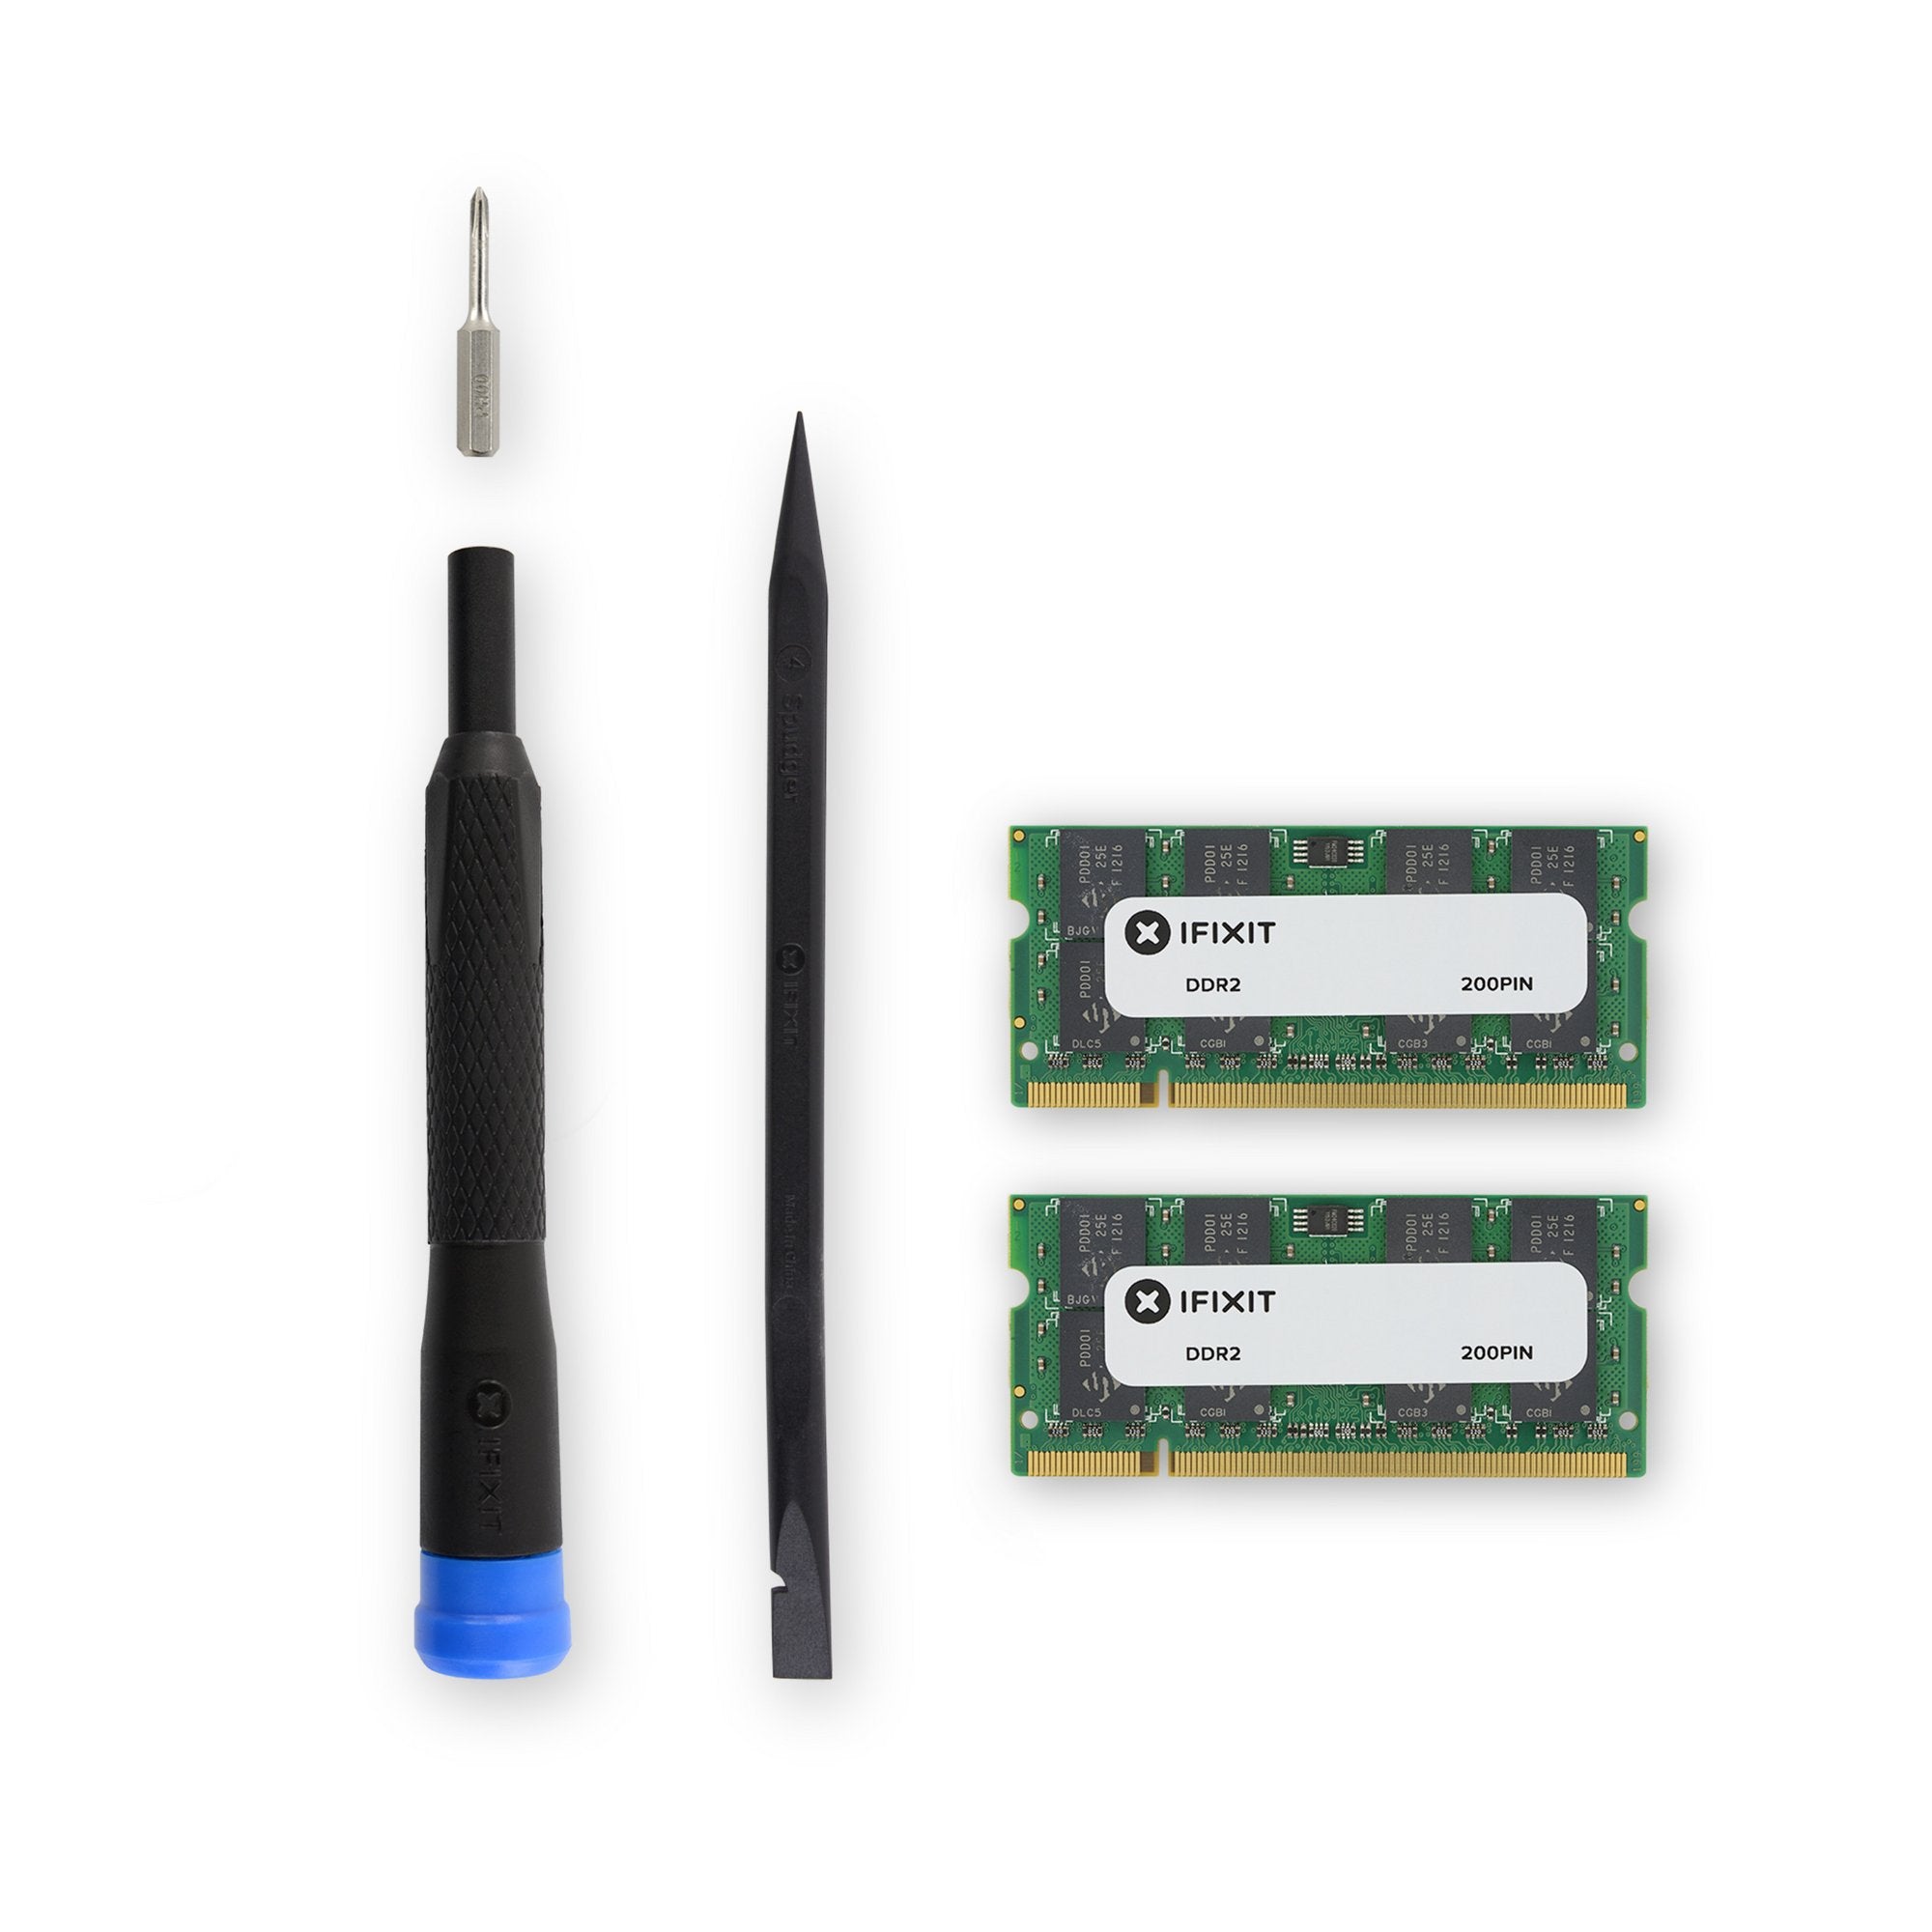 MacBook Pro 15" Model A1150 Memory Maxxer RAM Upgrade Kit